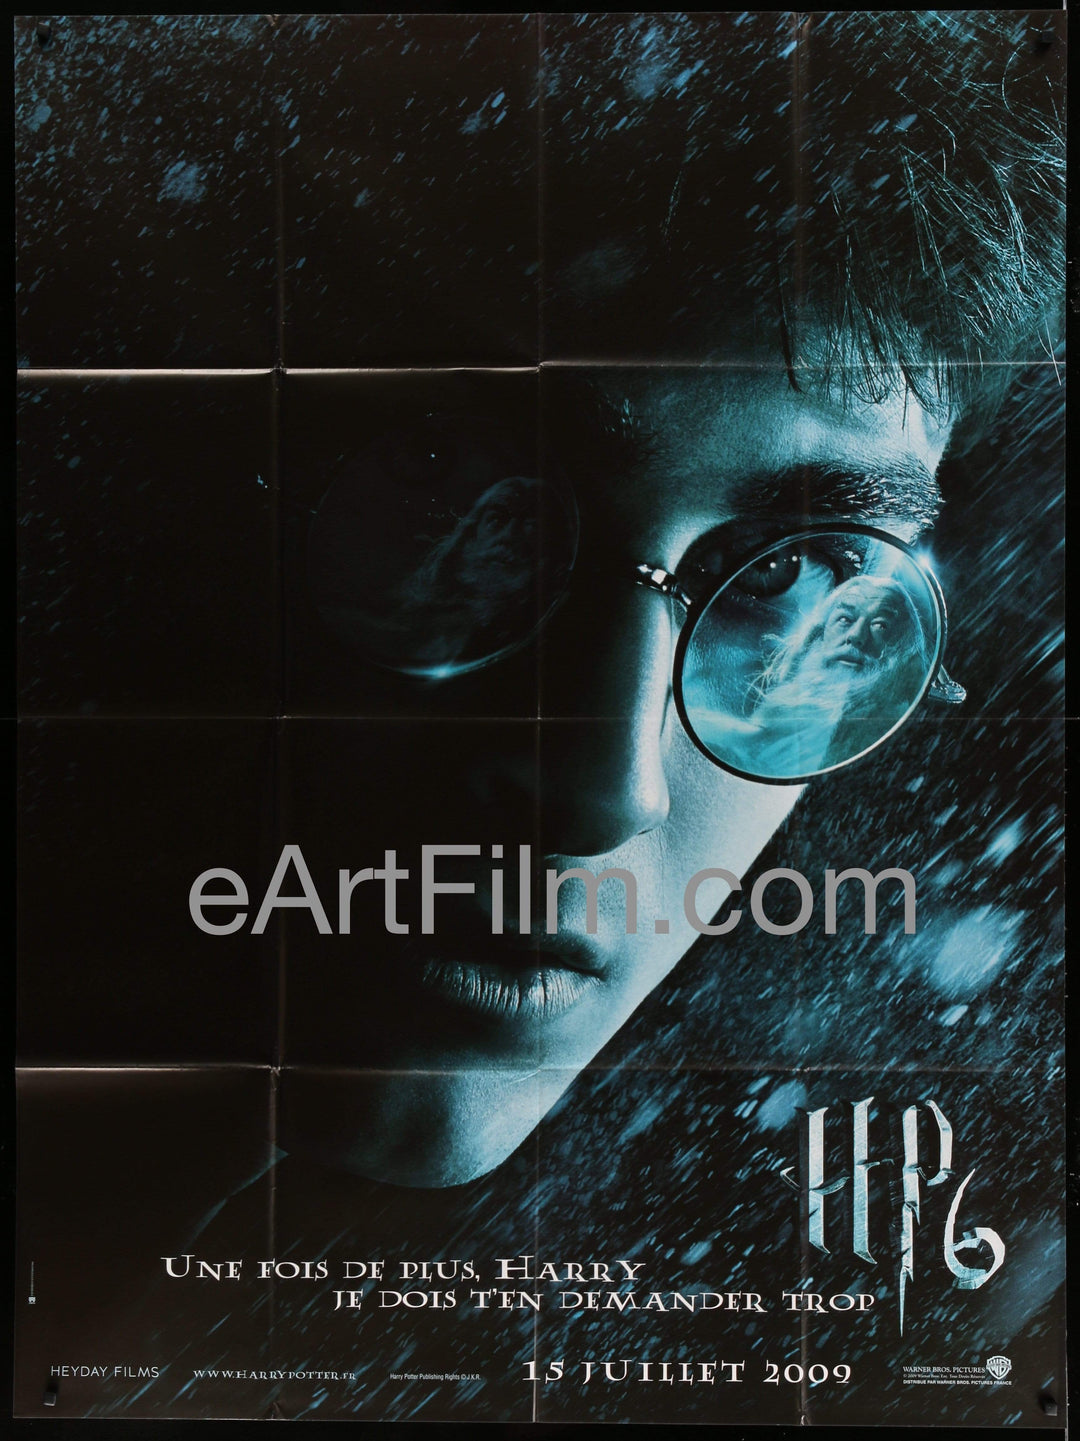 eArtFilm.com French 1 Panel Grande (46.5"x62") Harry Potter and the Half-Blood Prince-Daniel Radcliffe-Emma Watson-Alan Rickman